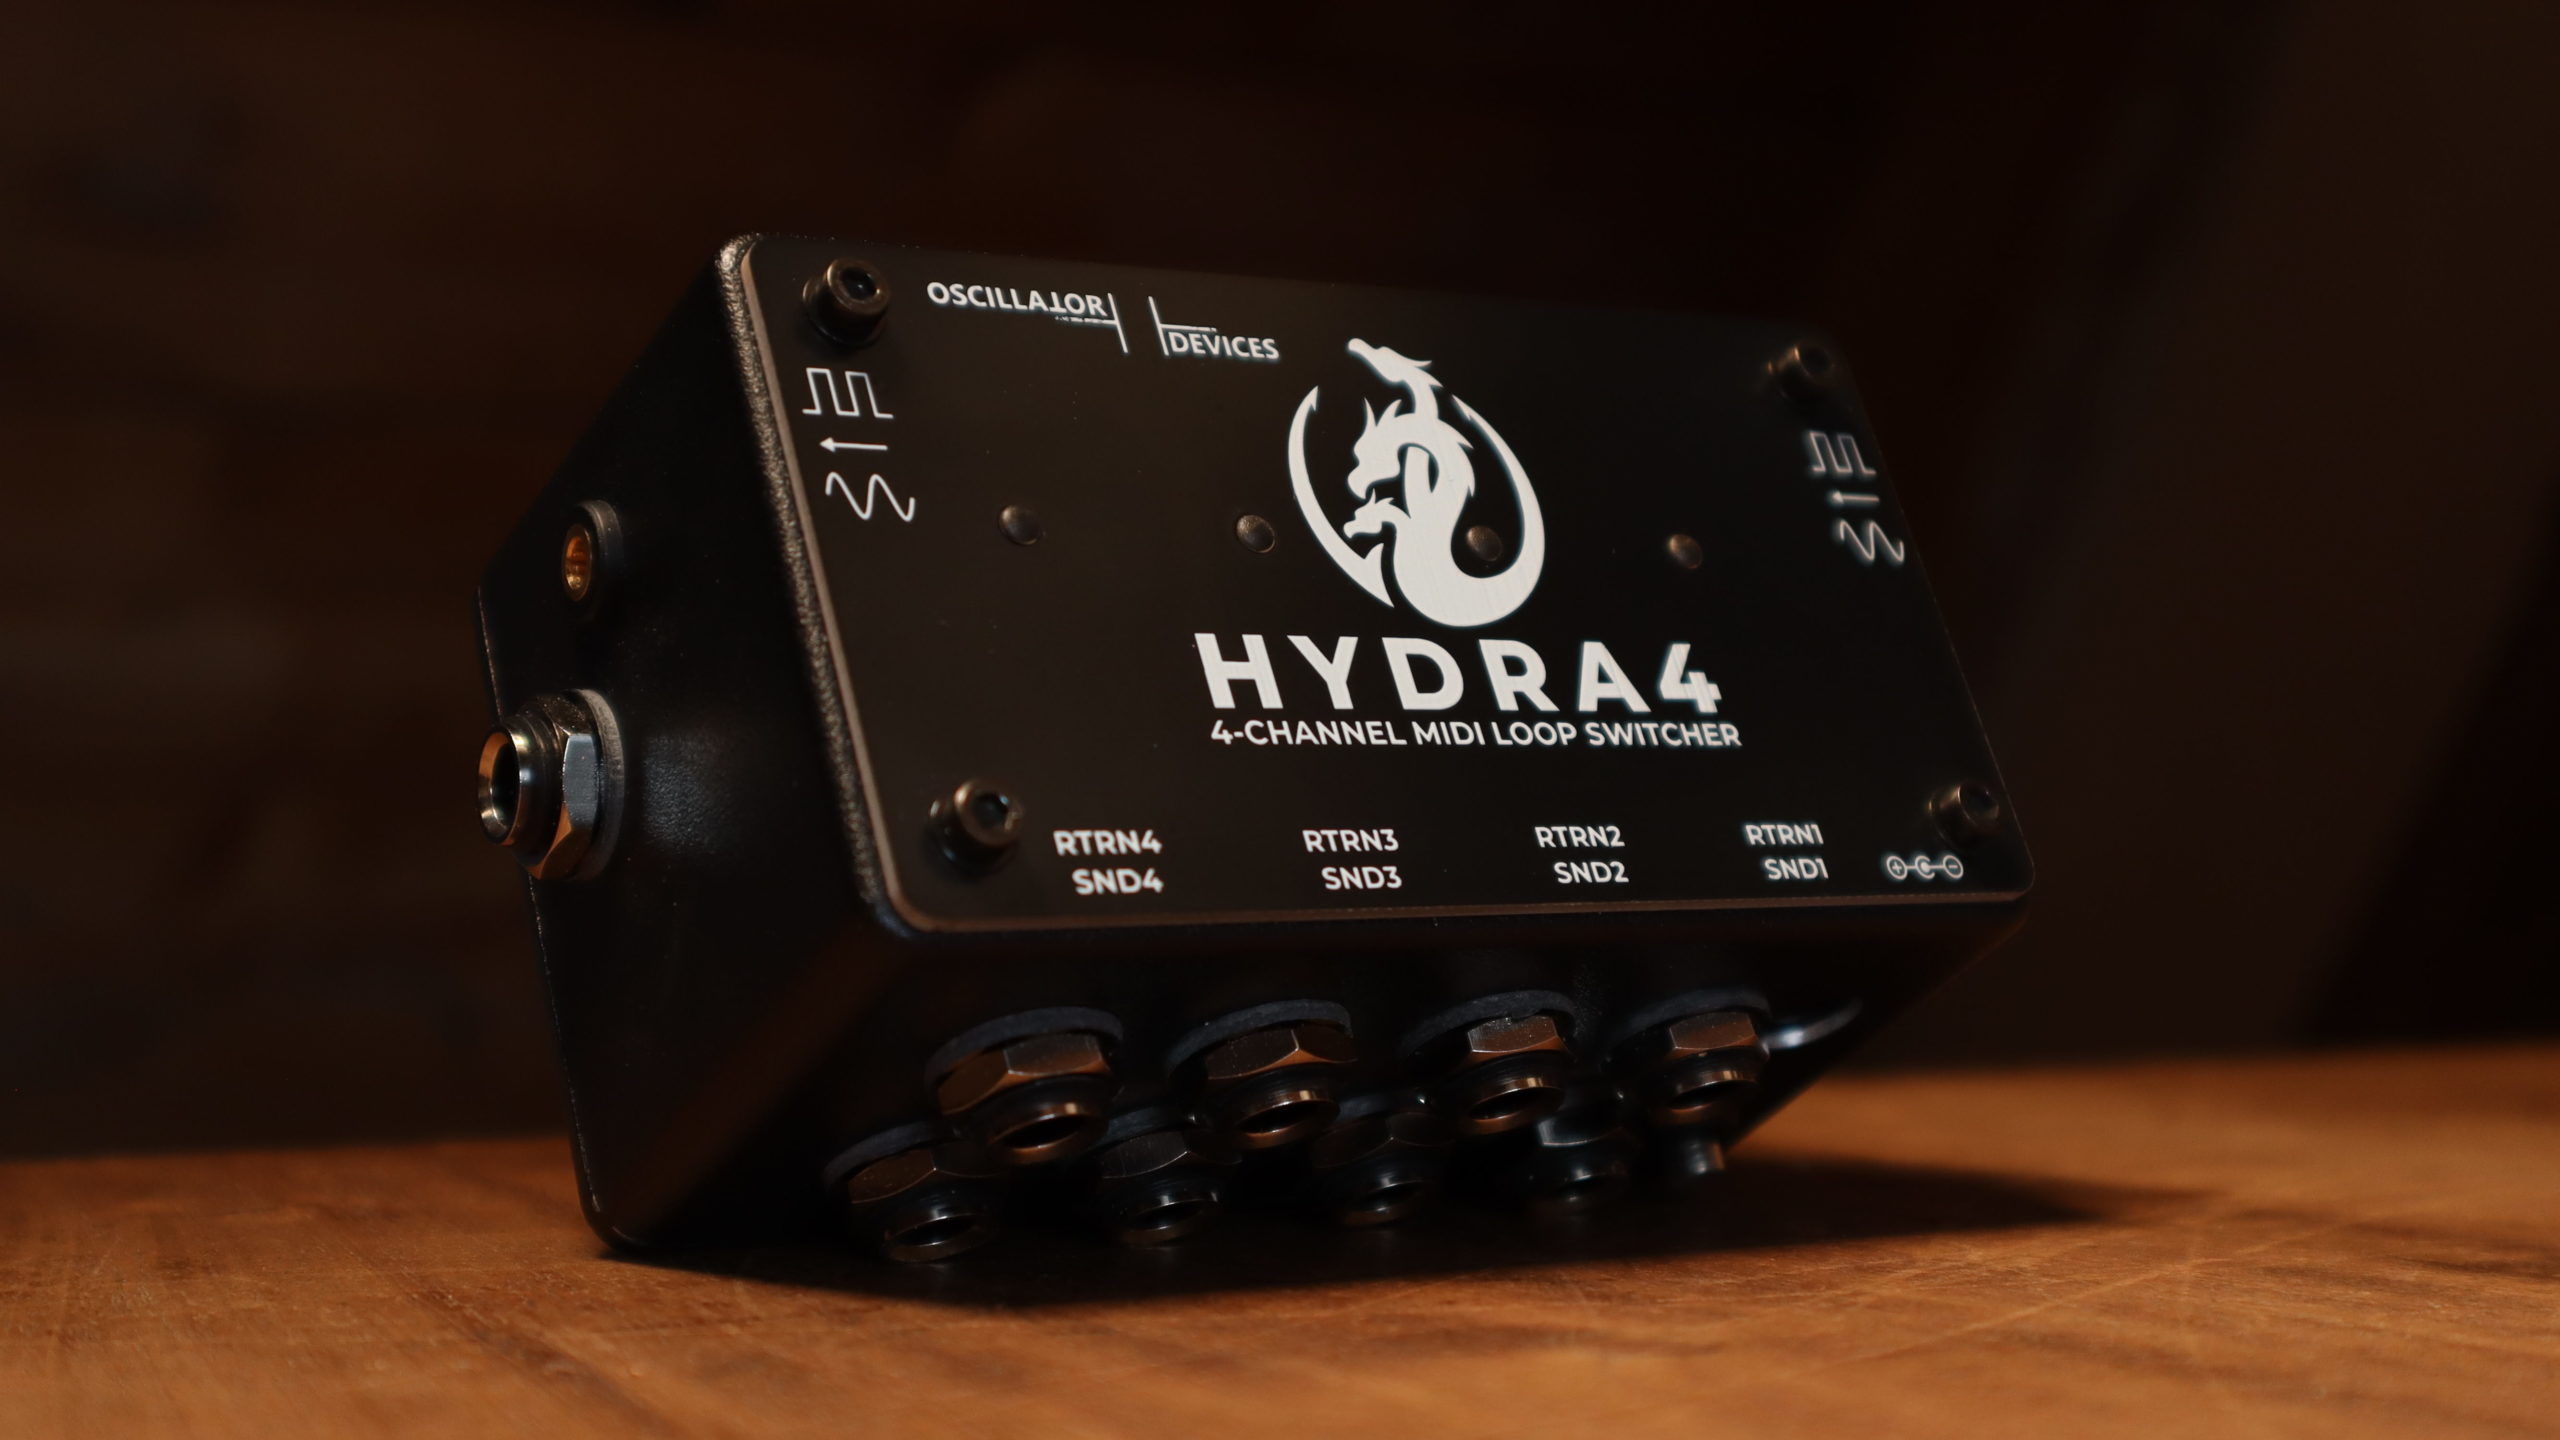 HYDRA4 - 4-Channel MIDI Loop Switcher